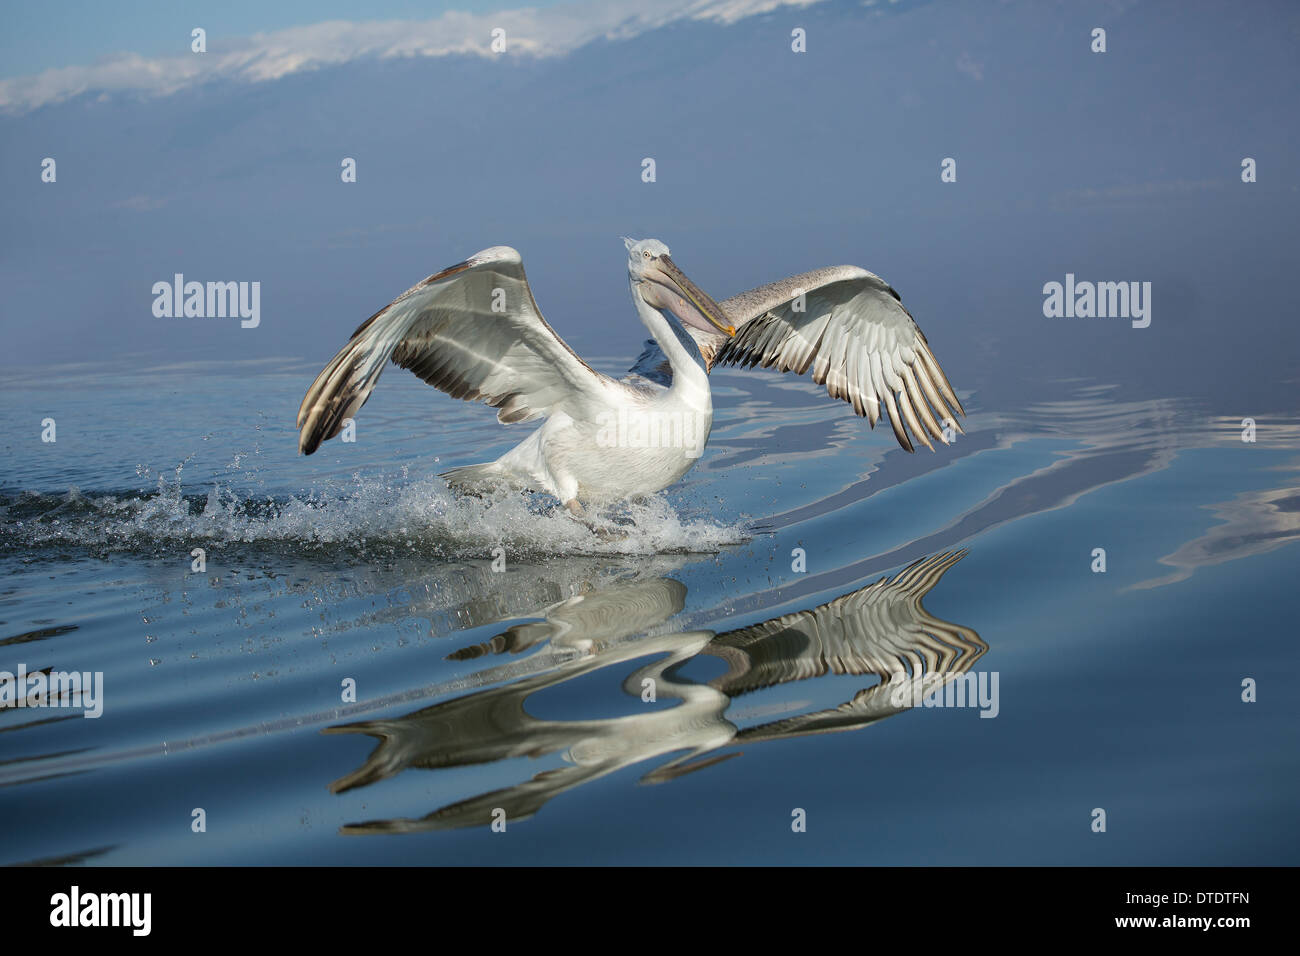 Dalmatian Pelican showing reflection upon landing Stock Photo